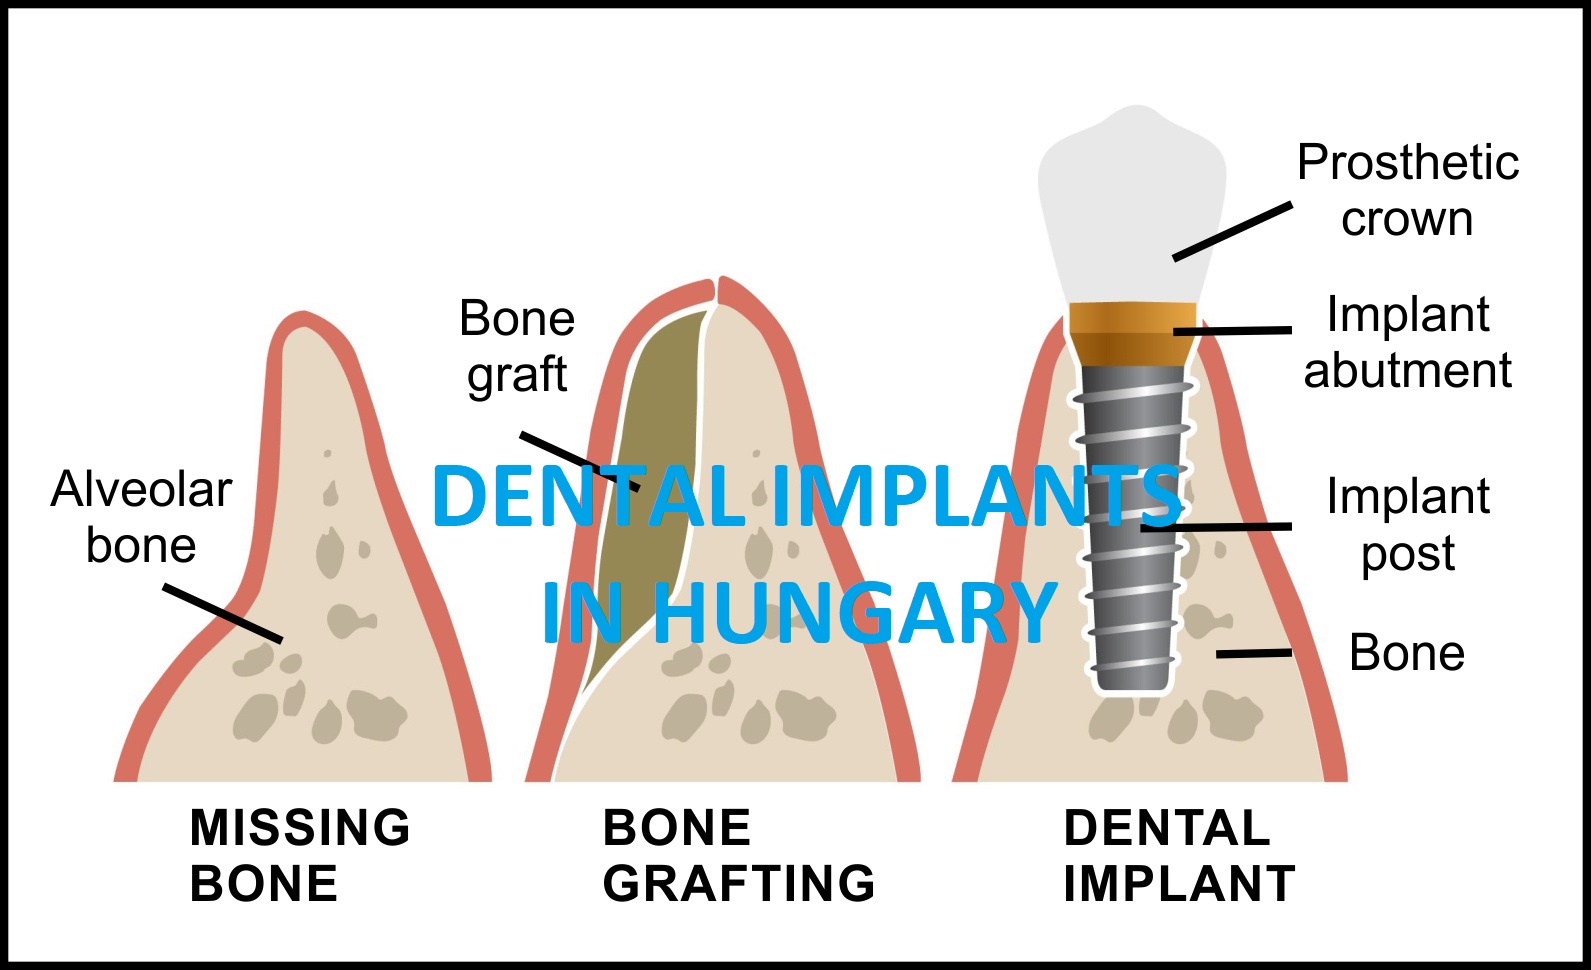 bone graft and dental implant illustration